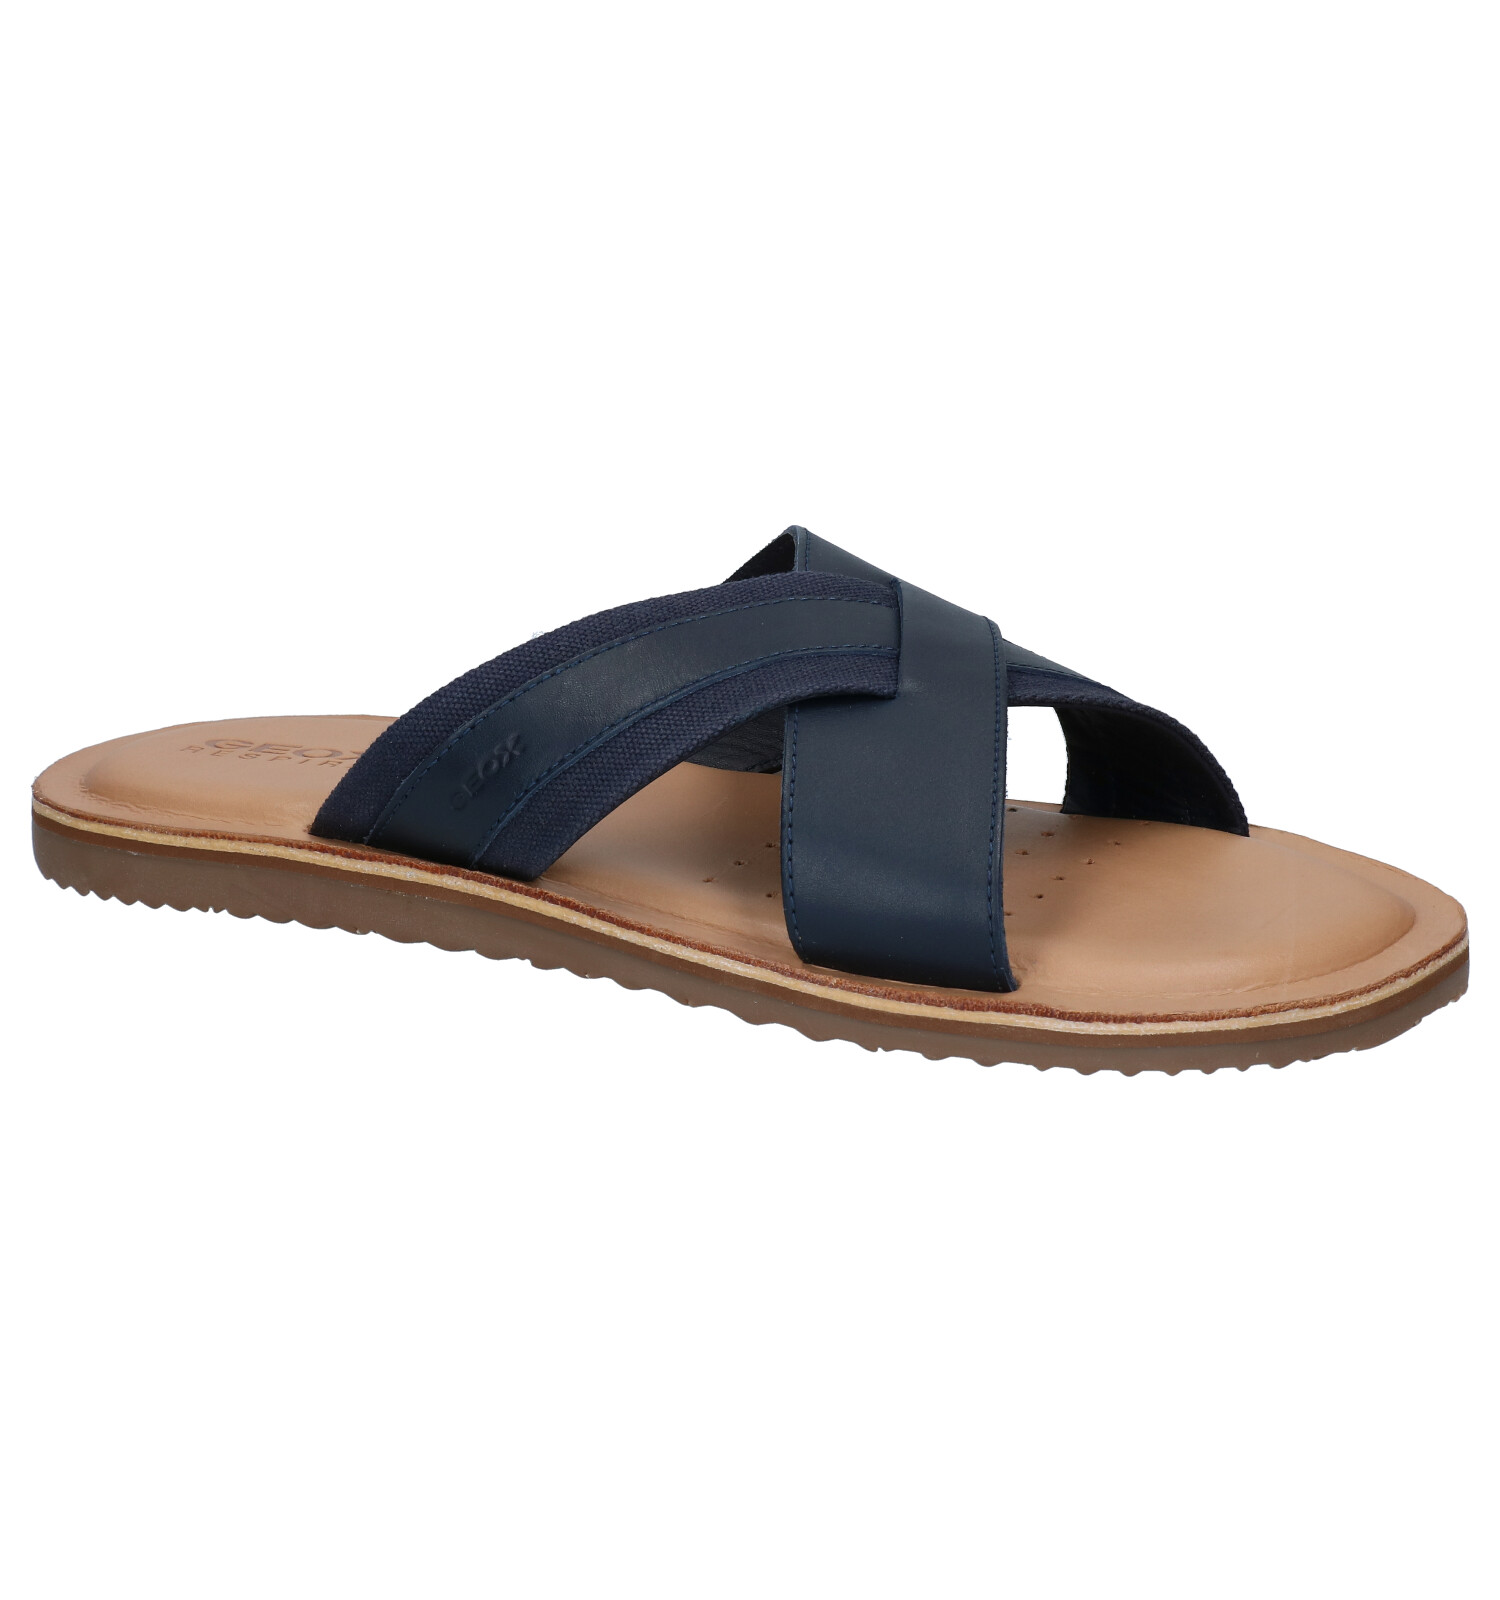 Trend merk op selecteer Geox Artie Blauwe Slippers | Heren Slippers